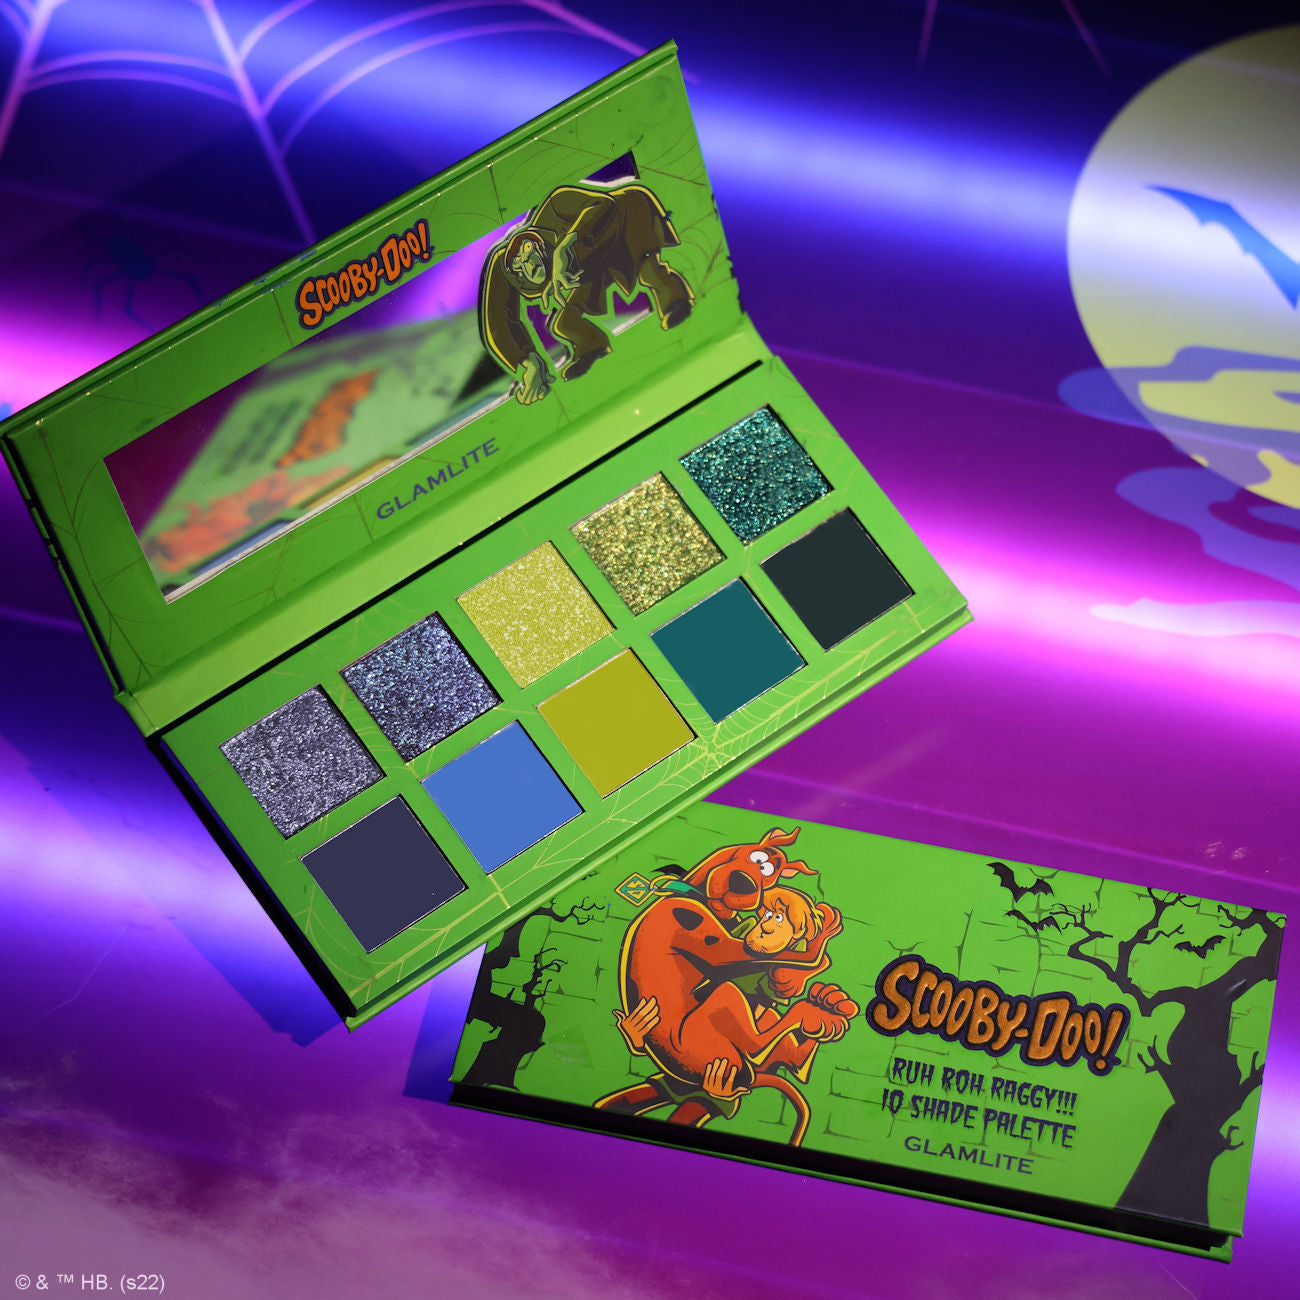 Scooby-Doo™ x GLAMLITE "Ruh-Roh Raggy" eyeshadow palette